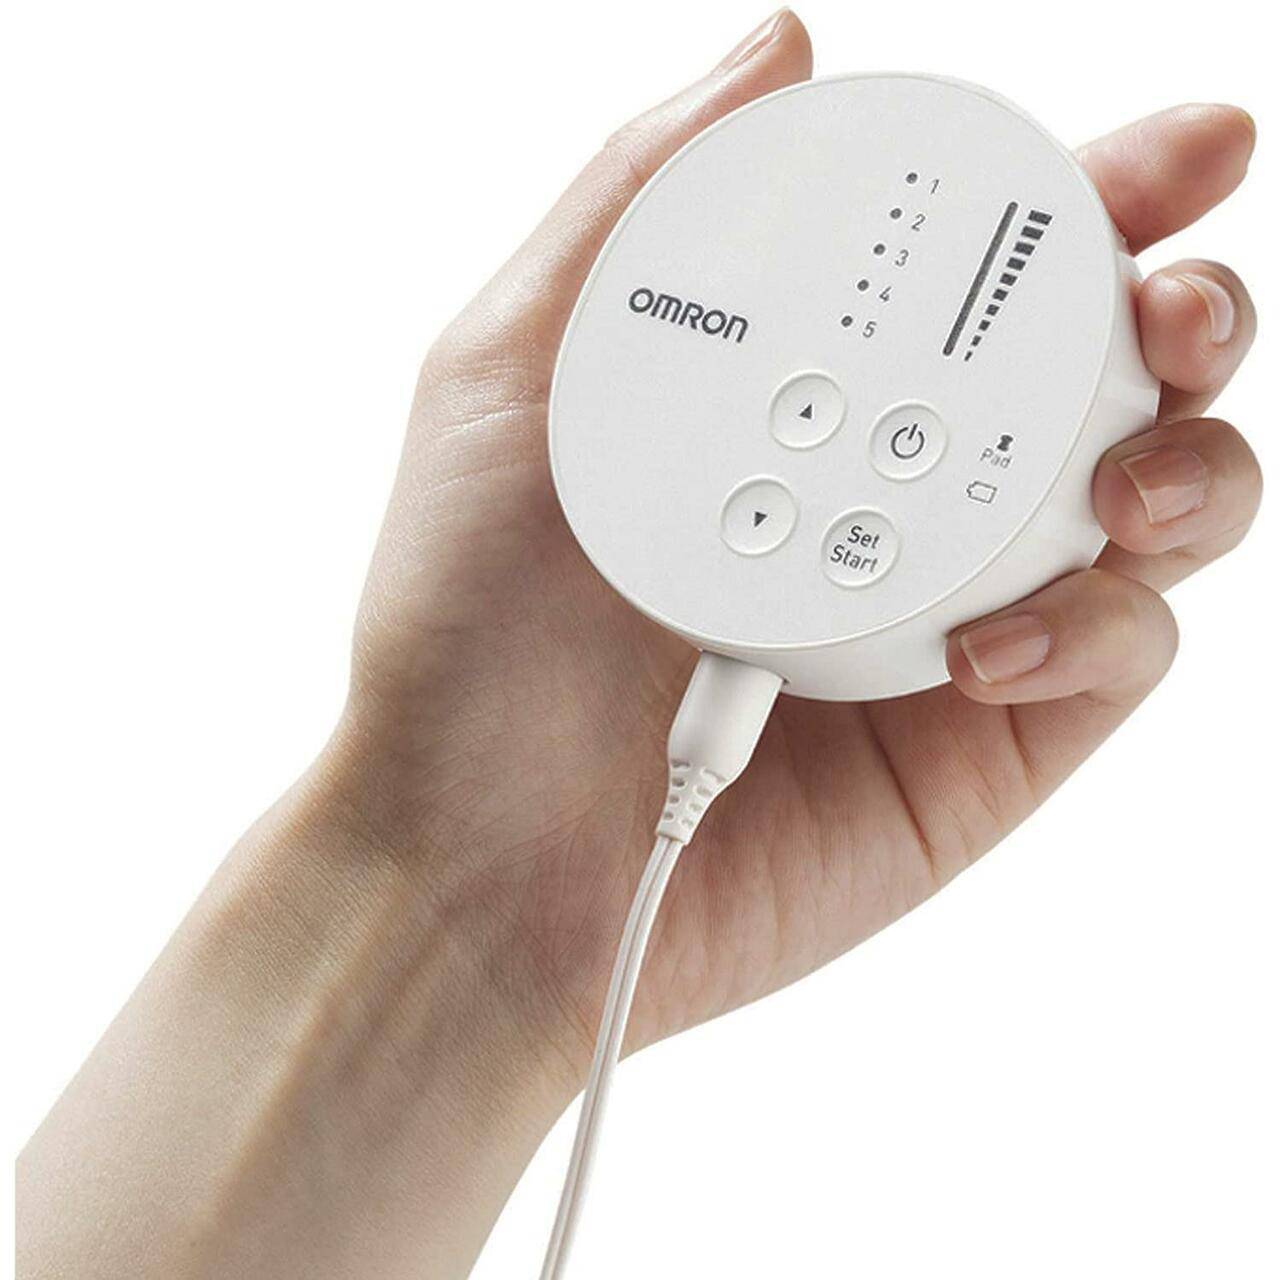 Omron Pocket Tens Digital Pain Relief Machine - Body Massager, Pre-Set Programs - Healthxpress.ie